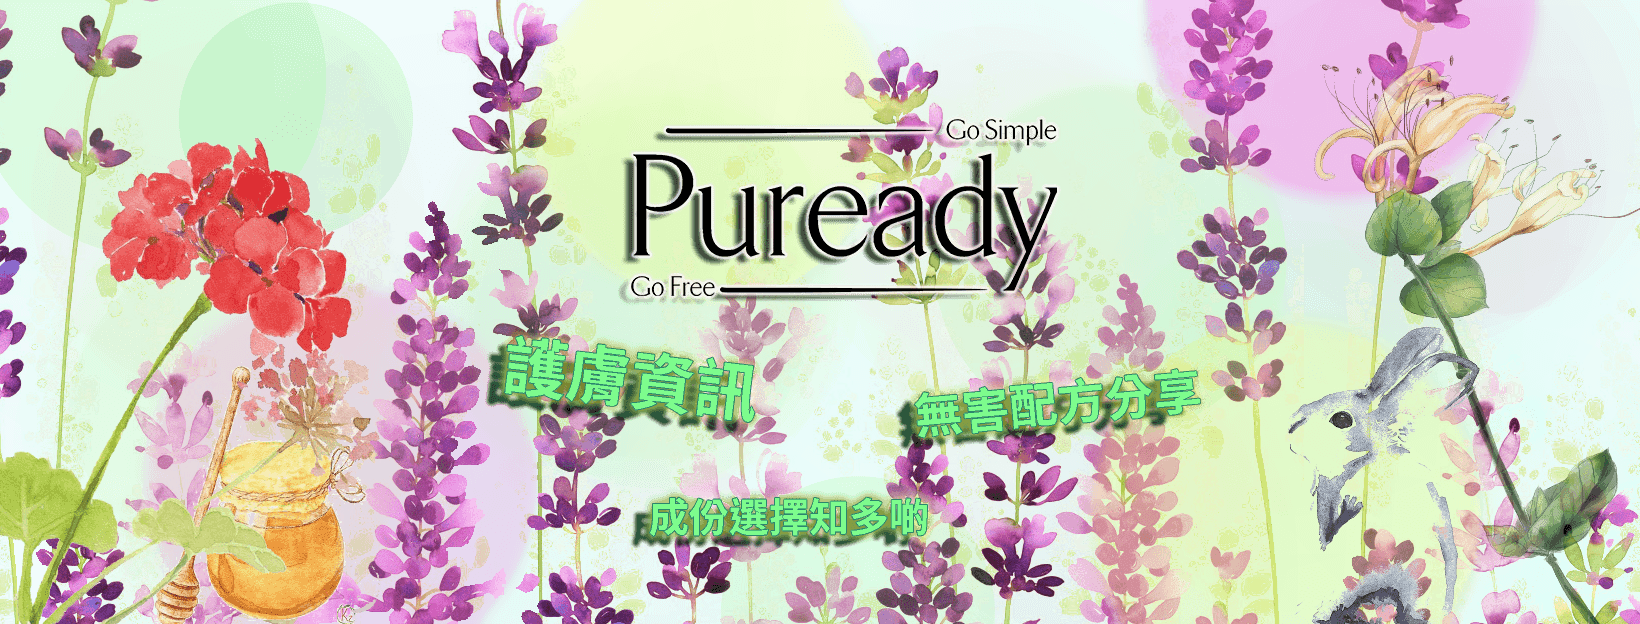 關於 Puready